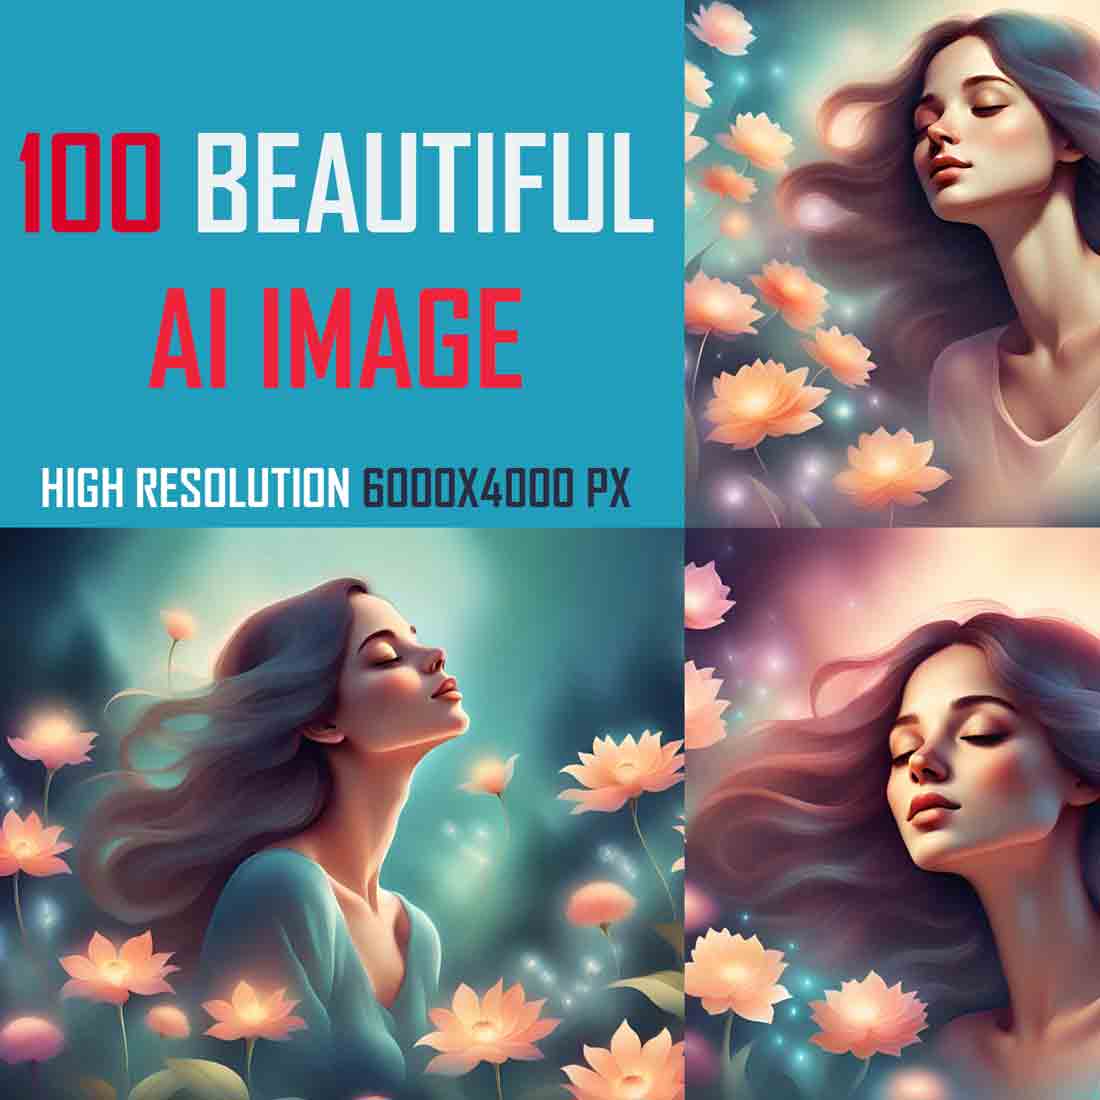 100 BEAUTIFUL IMAGE BUNDLE preview image.